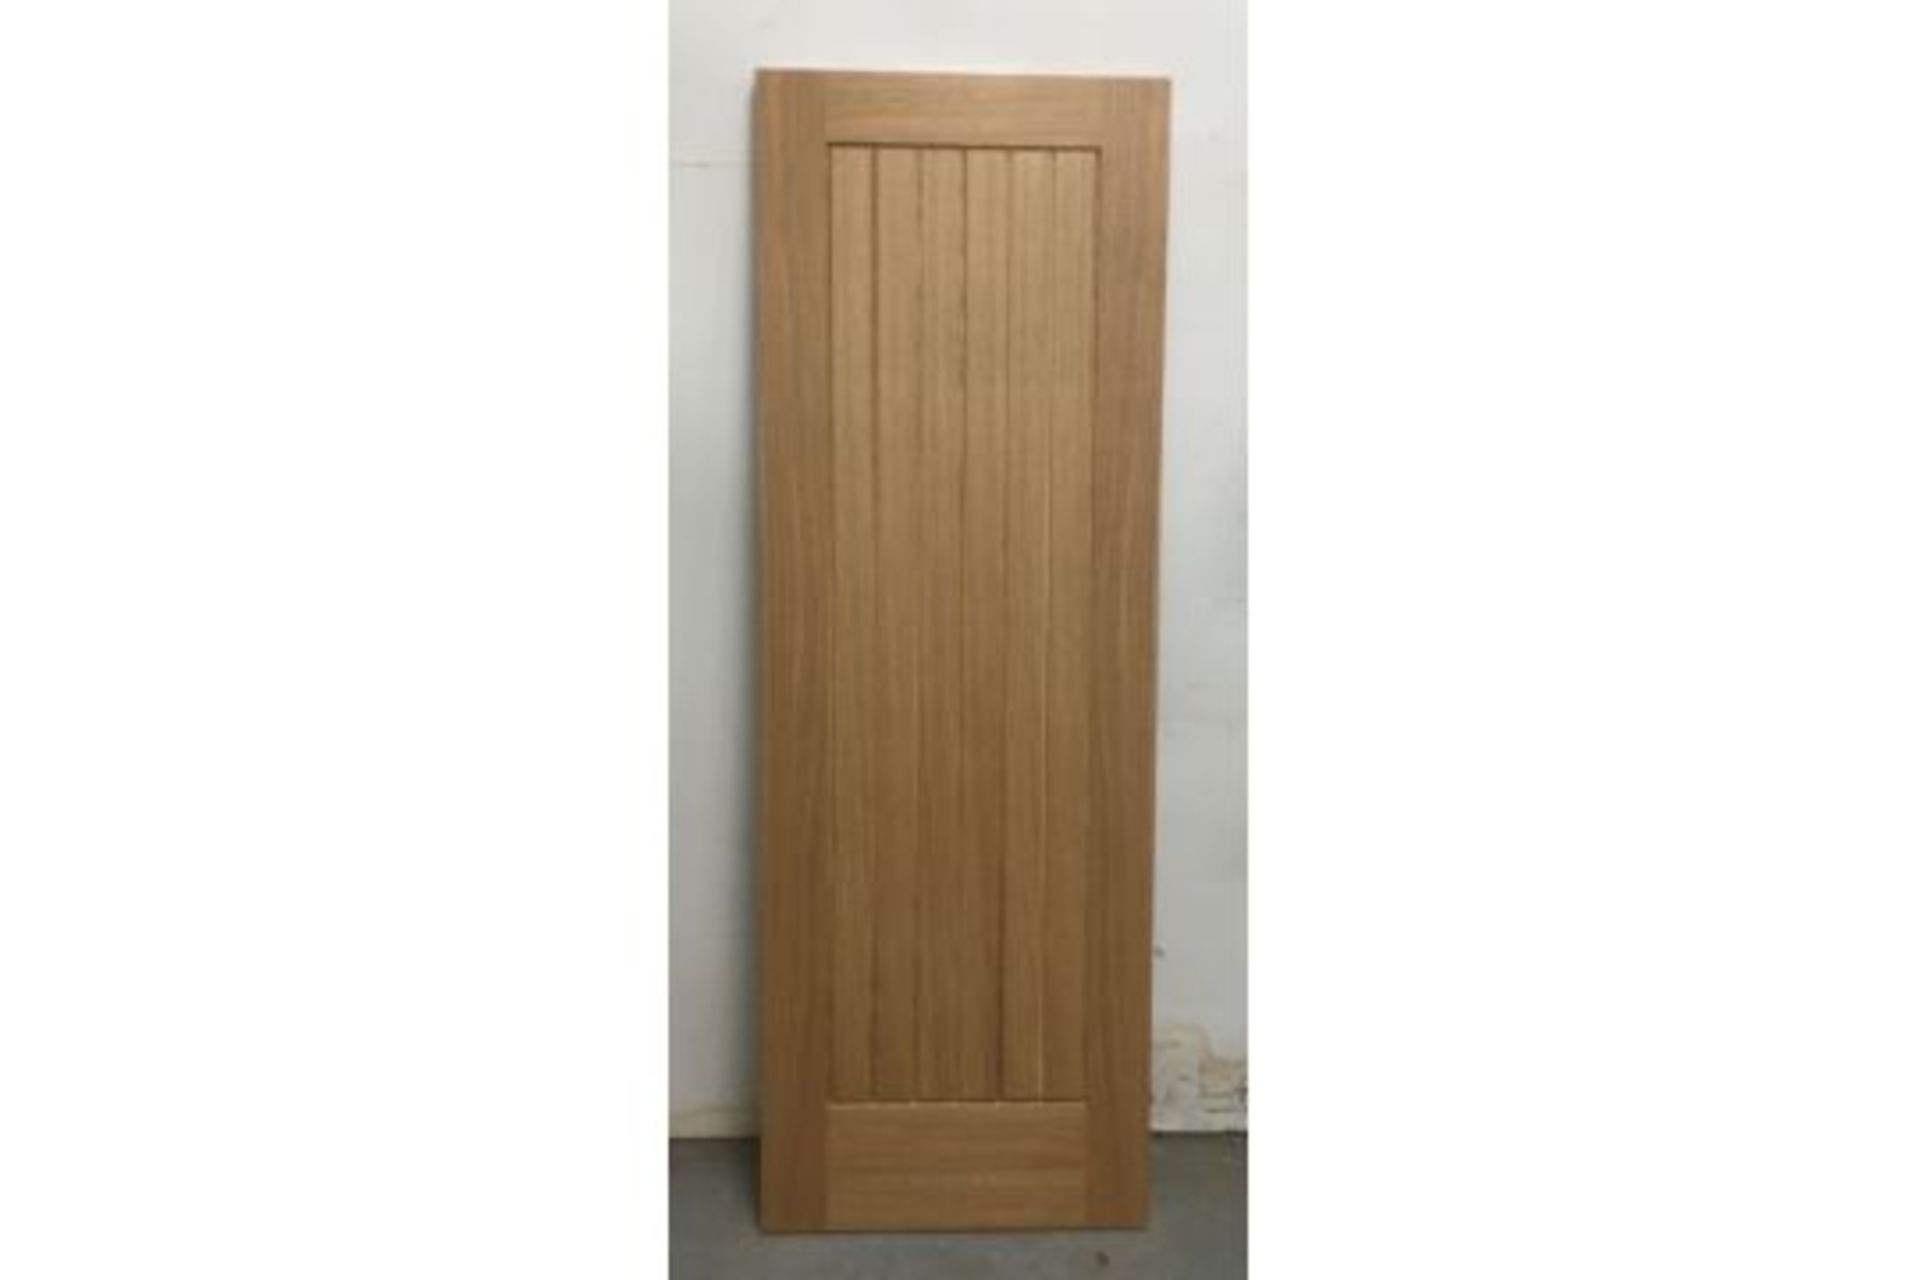 Unlabelled Grid Patterned Internal Wooden Door | 1976mm x 686mm x 35mm